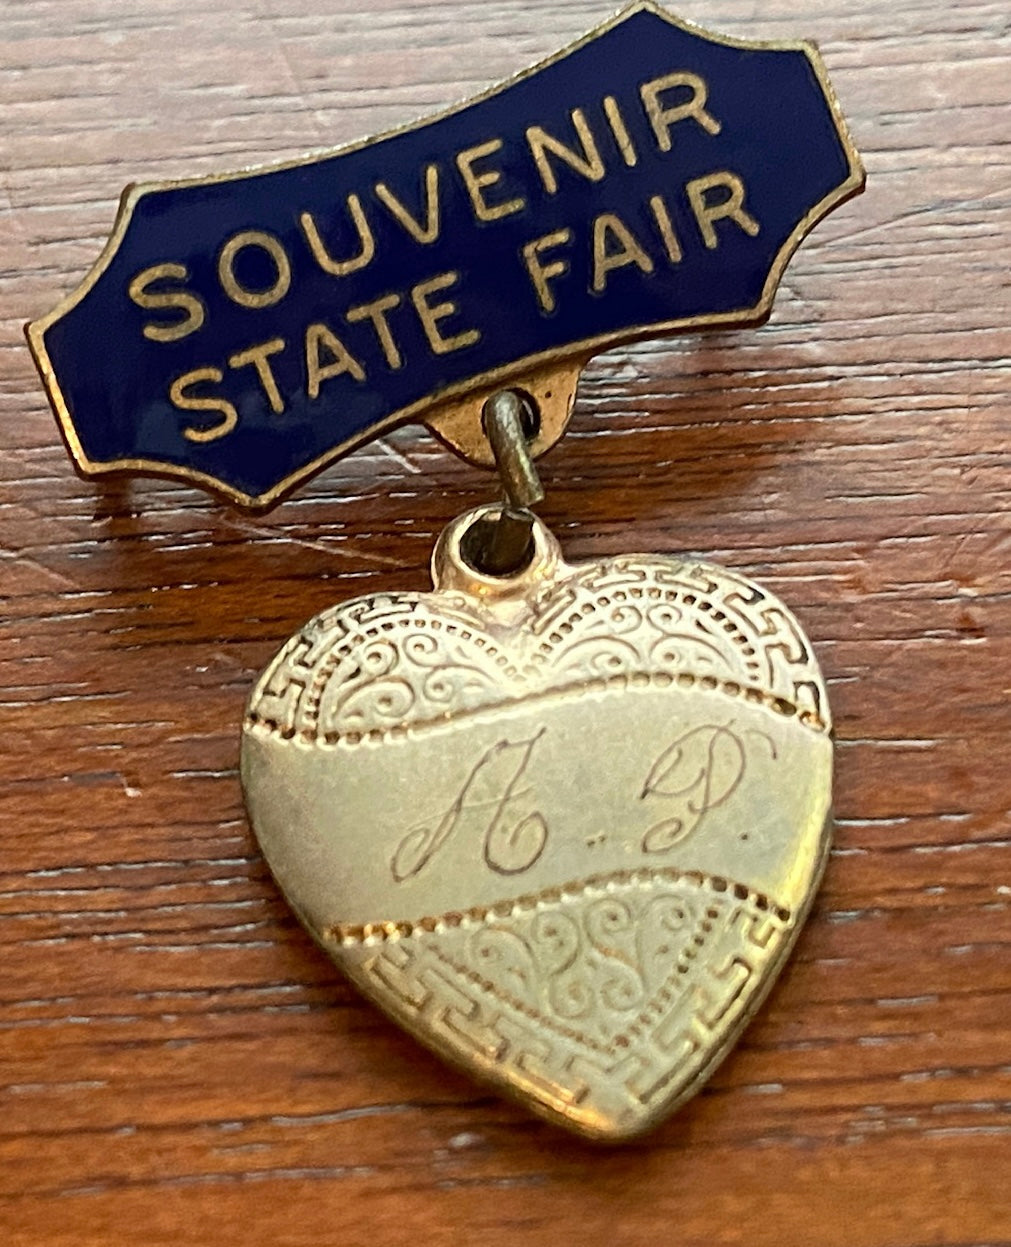 Vintage Antique Gold Filled Enamel Souvenir State Fair Heart Brooch Pin